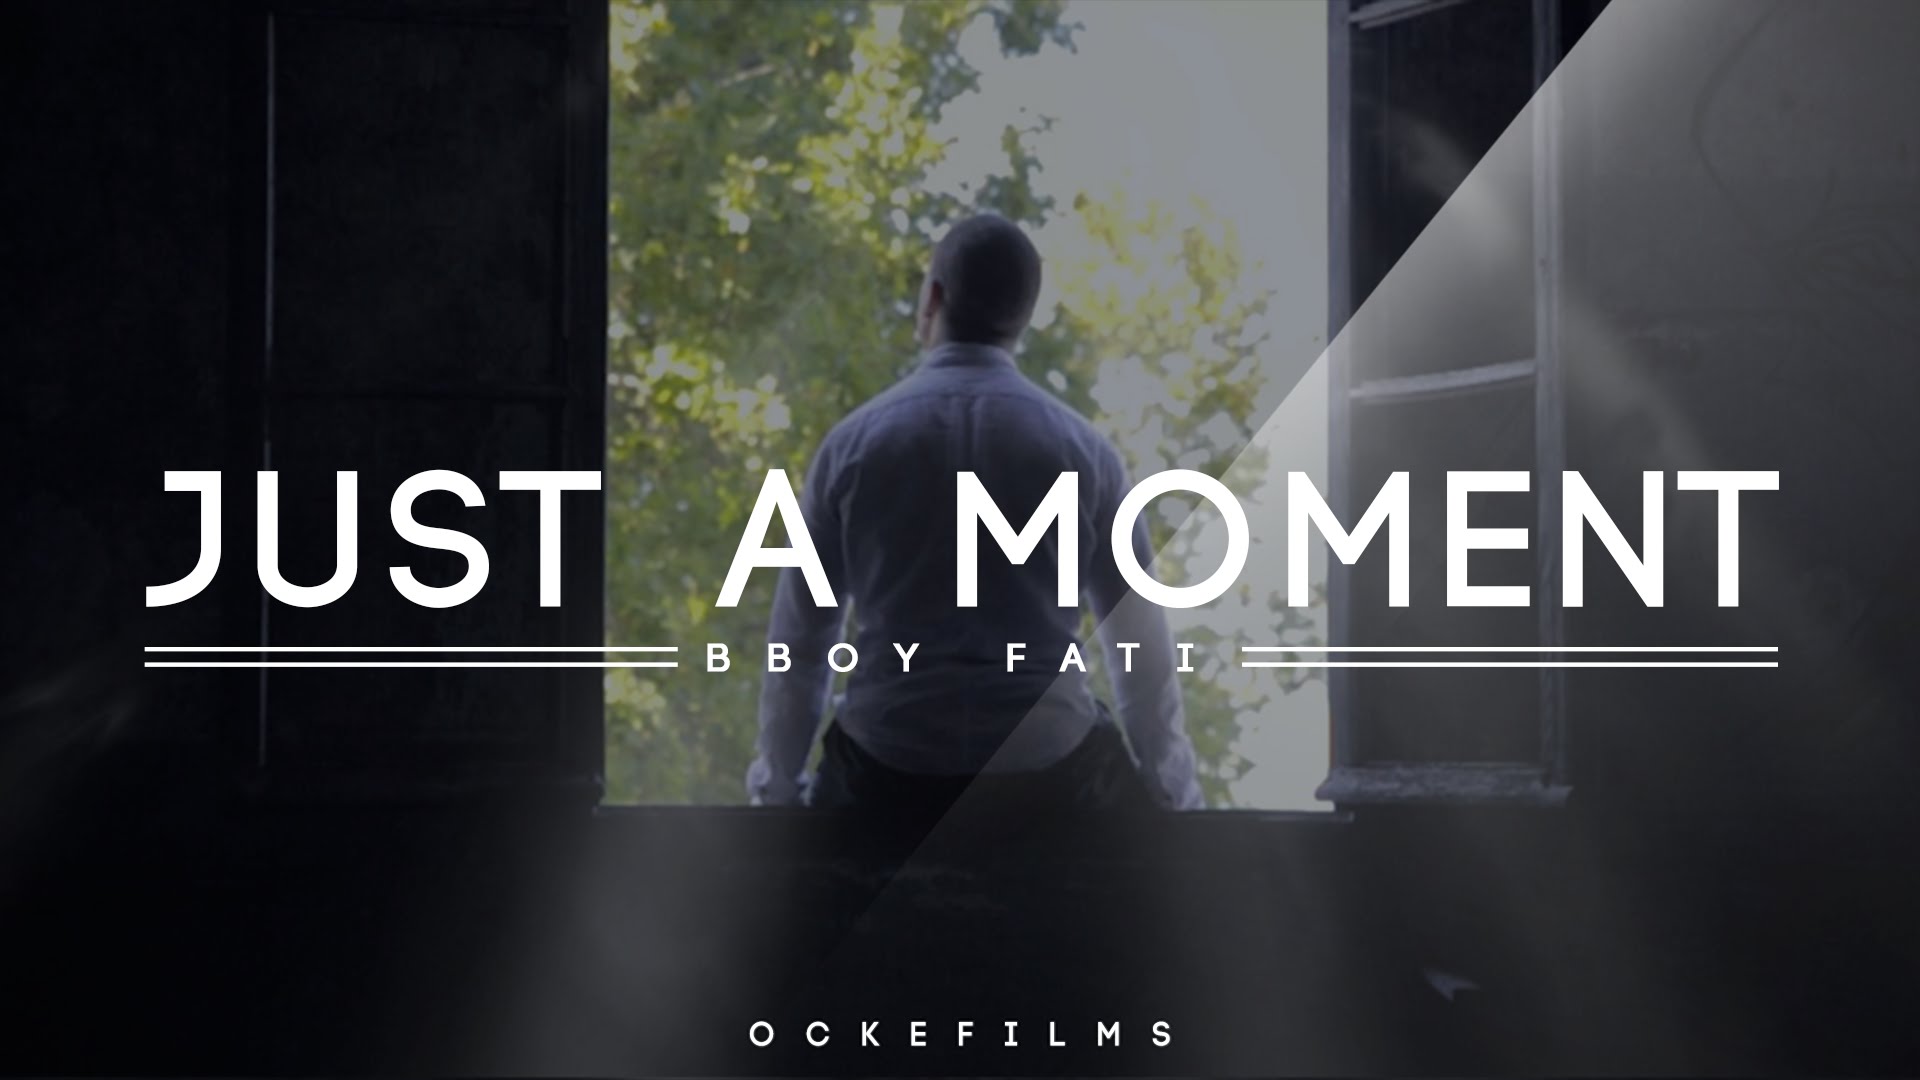 Just A Moment - Bboy Fati | OckeFilms - YouTube